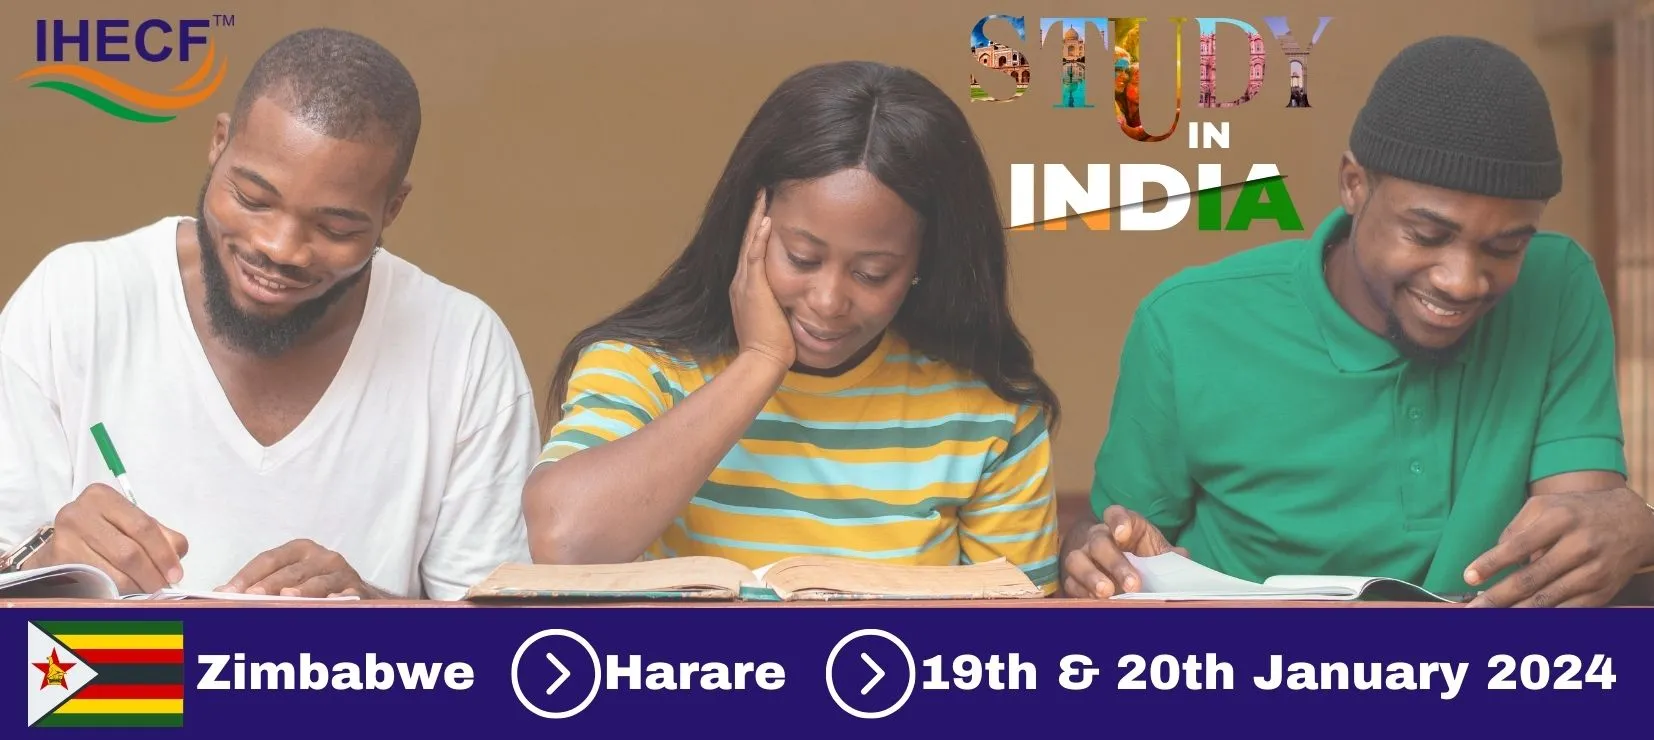 IHECF 2024 Zimbabwe